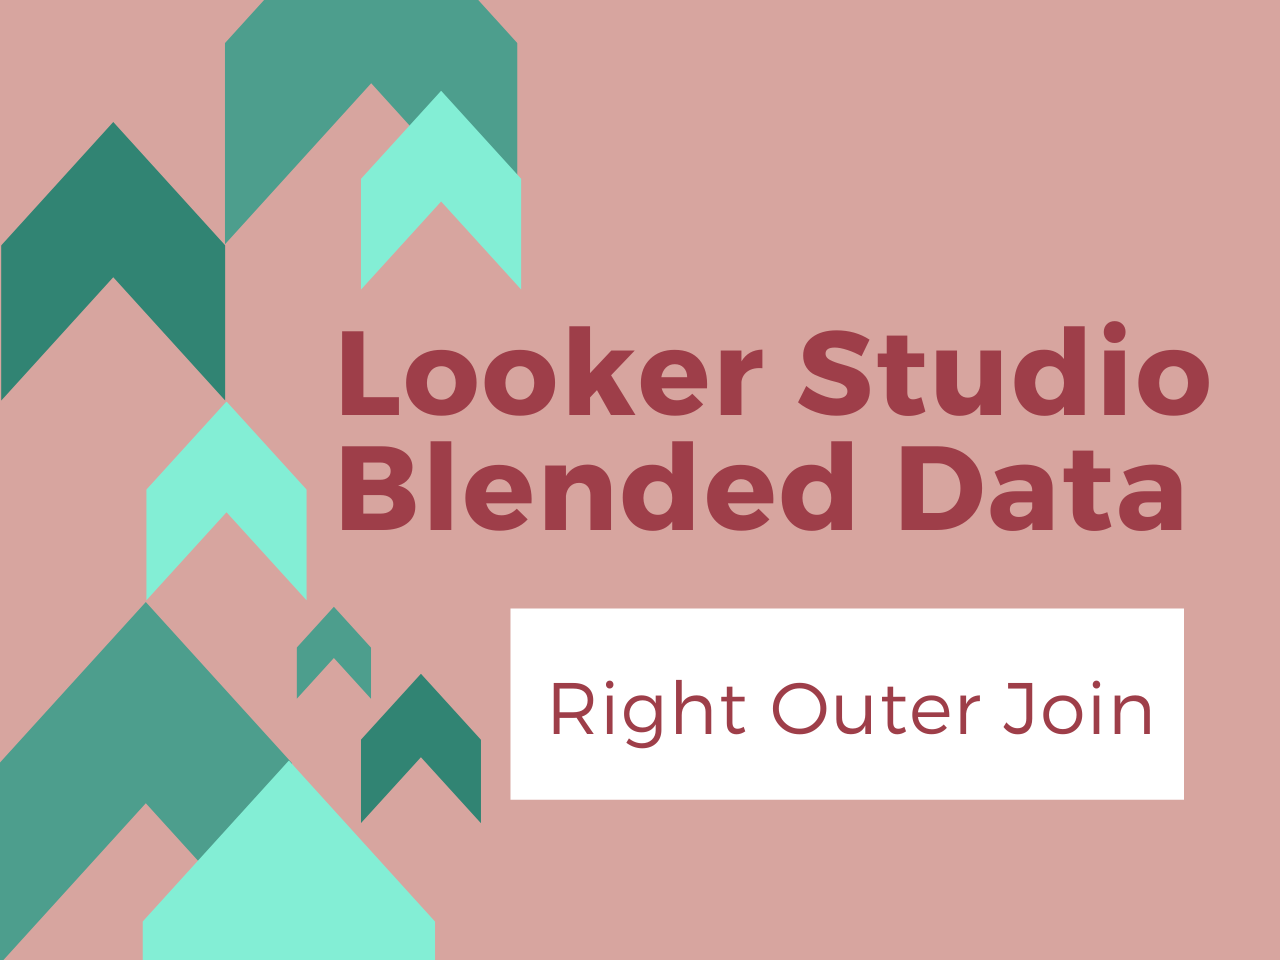 Looker Studio Blended Data Joins – Right Outer Join